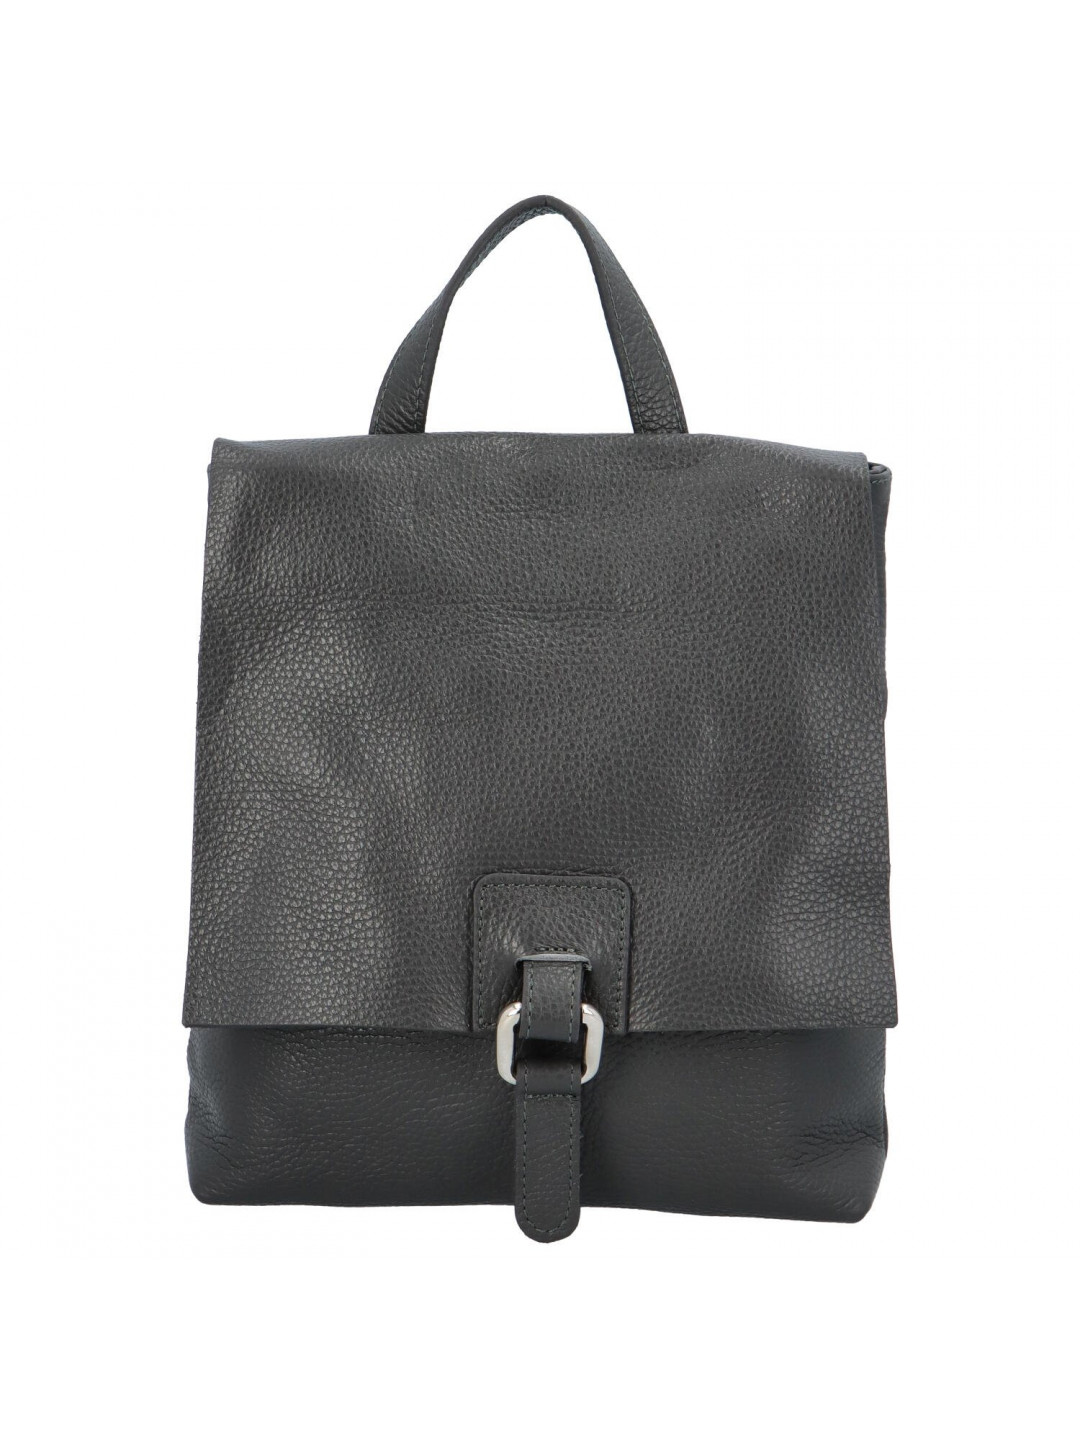 Dámský kožený batůžek kabelka tmavě šedý – ItalY Francesco Small